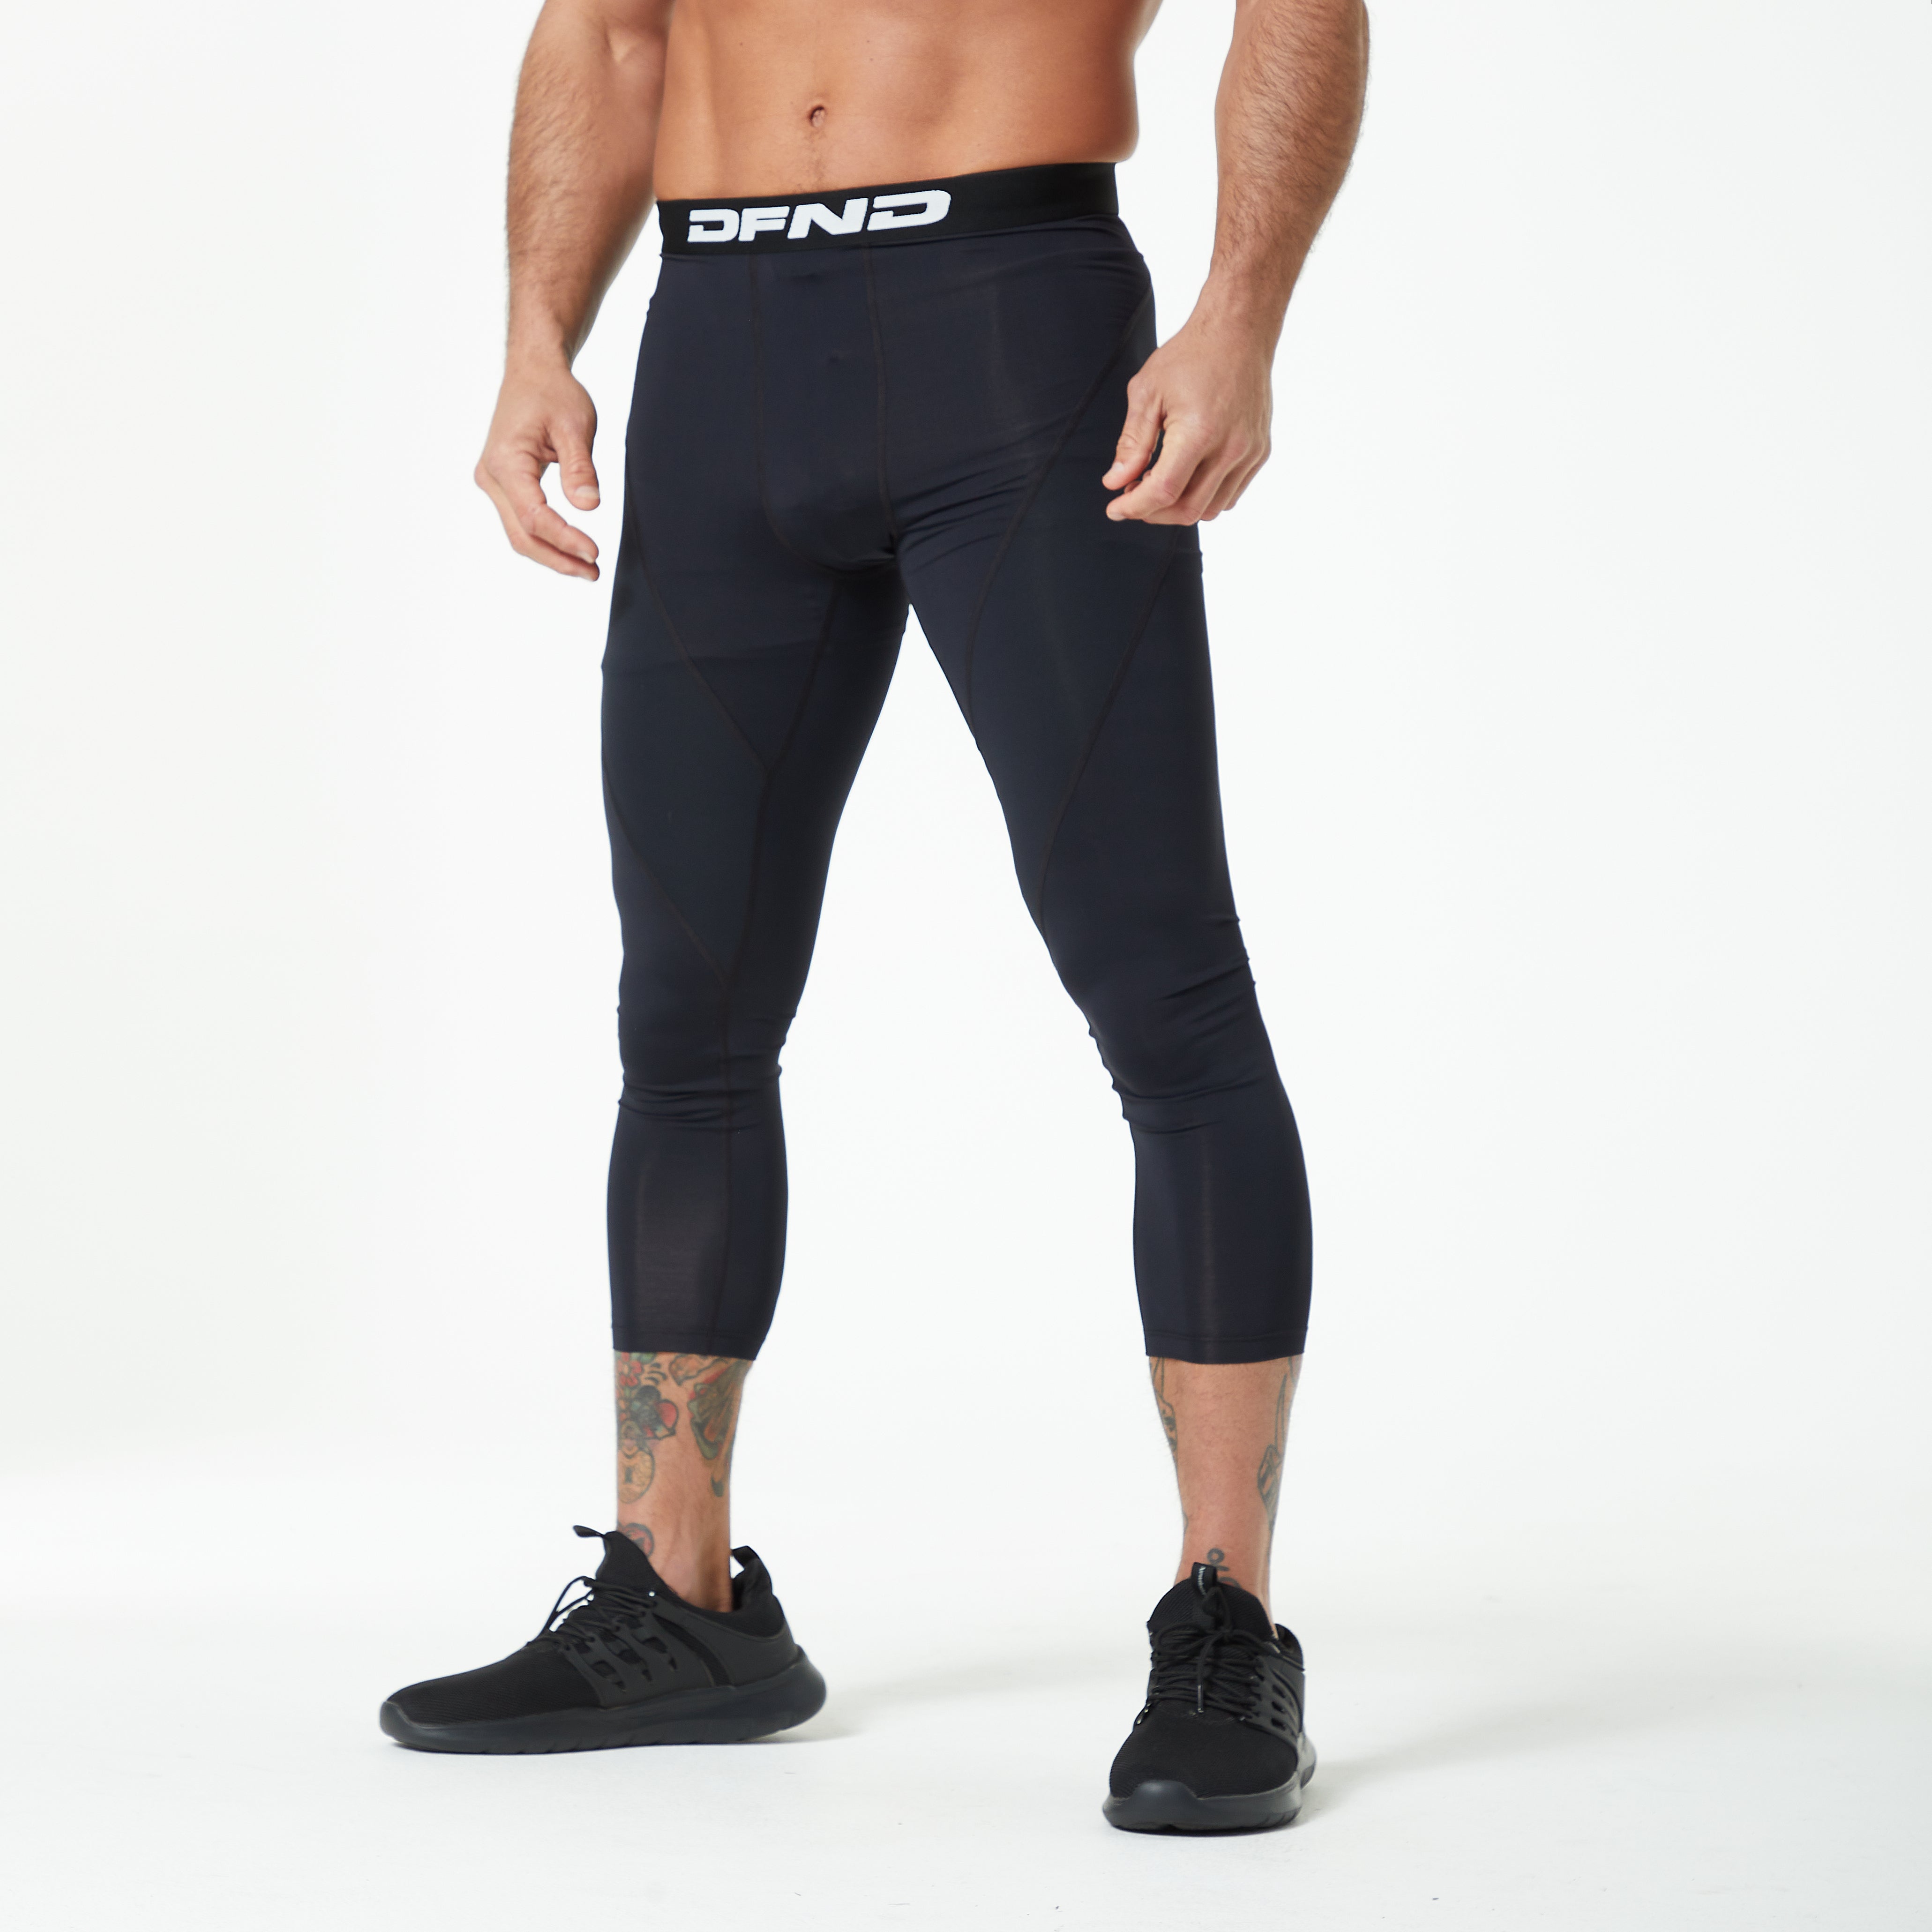 3/4 elite compression pants McDavid - Men's wear - Slocog wear